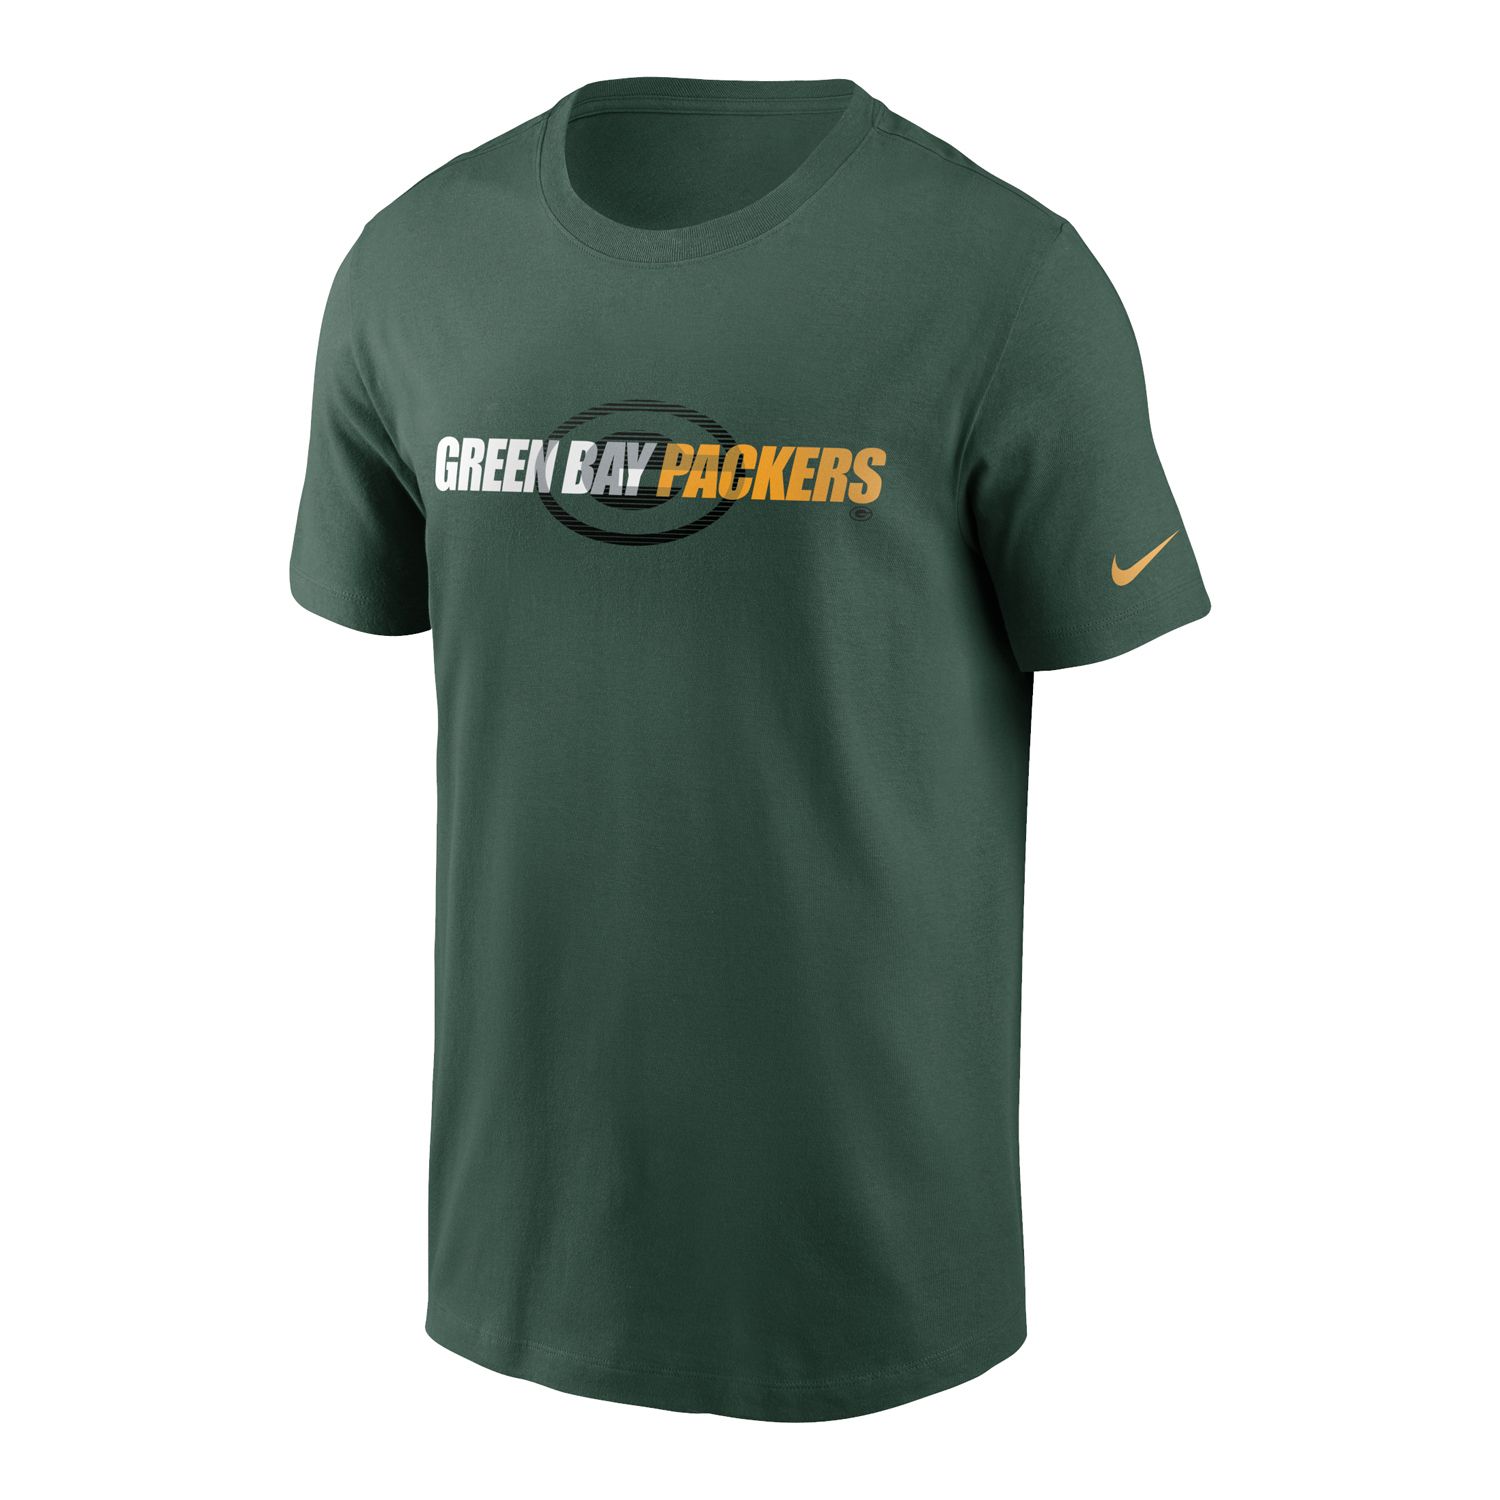 Mens Green Bay Packers T-Shirts Tops 